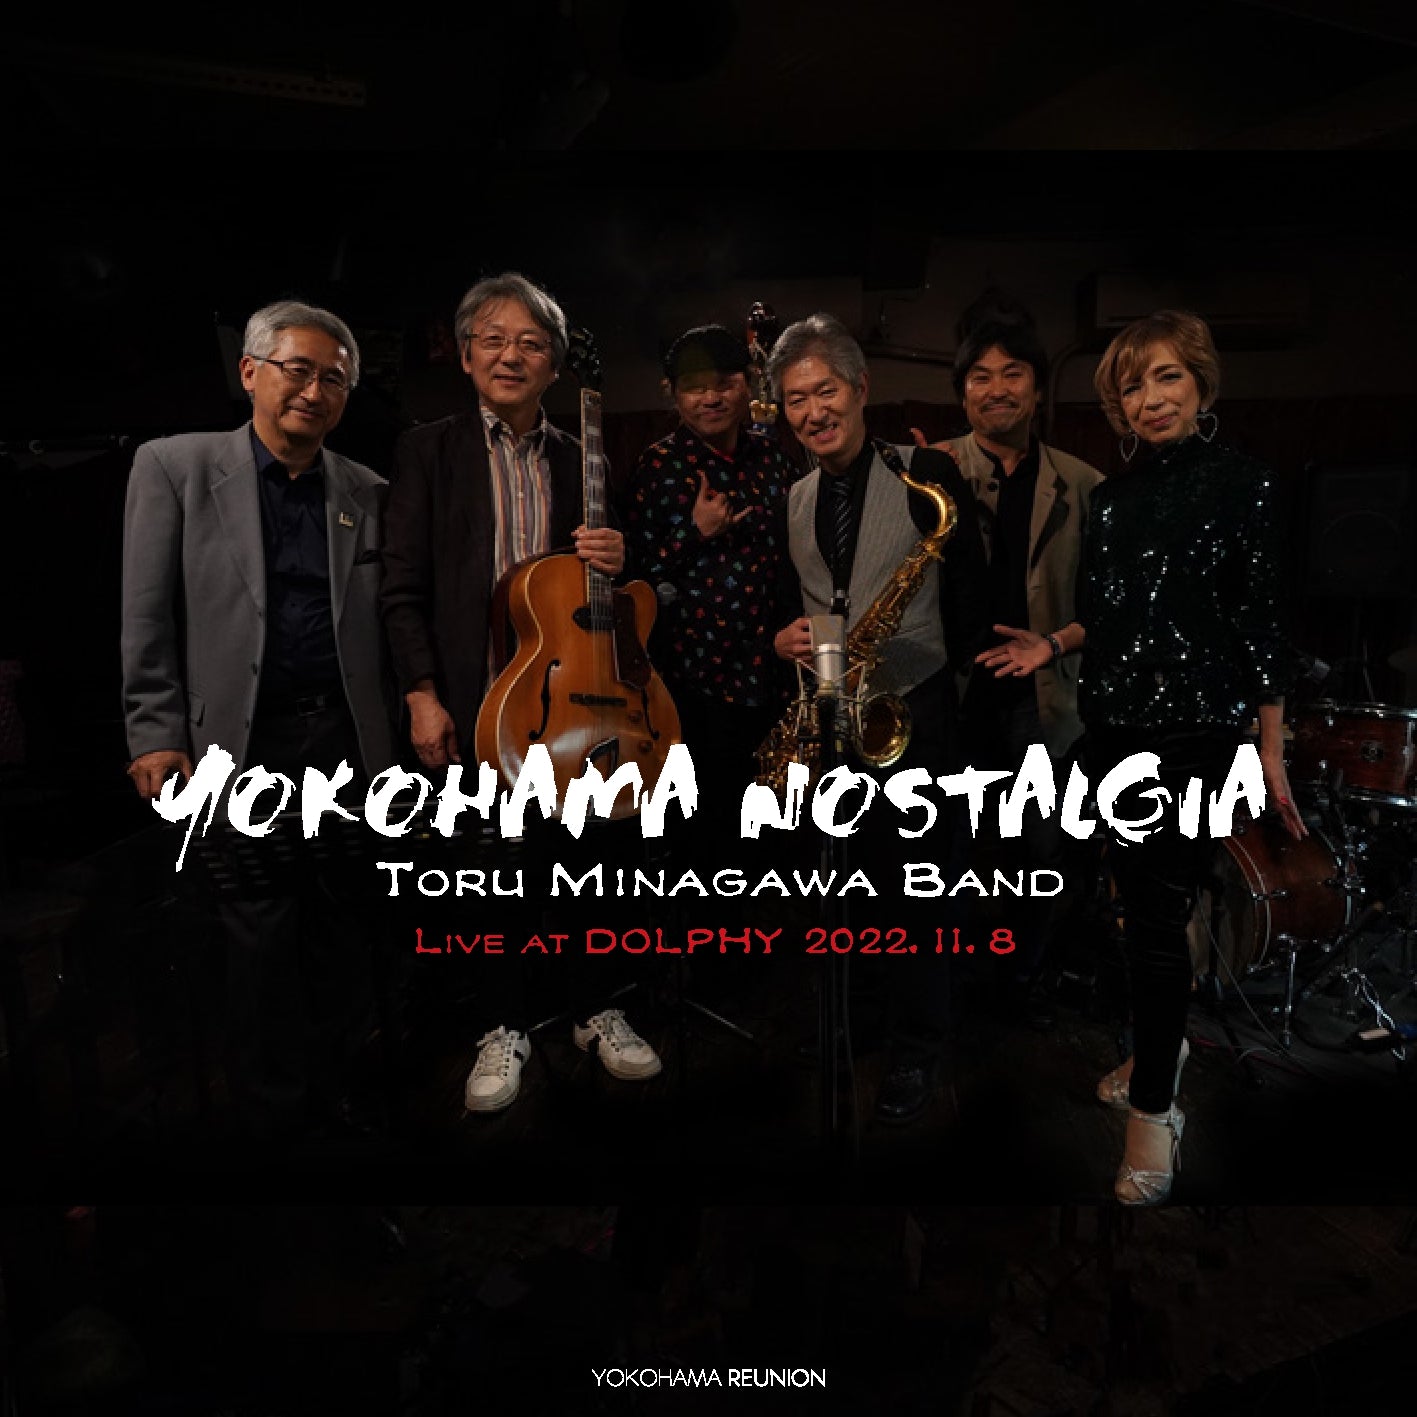 Toru Minagawa Band  『YOKOHAMA NOSTALGIA』  Live at DOLPHY 2022.11.8